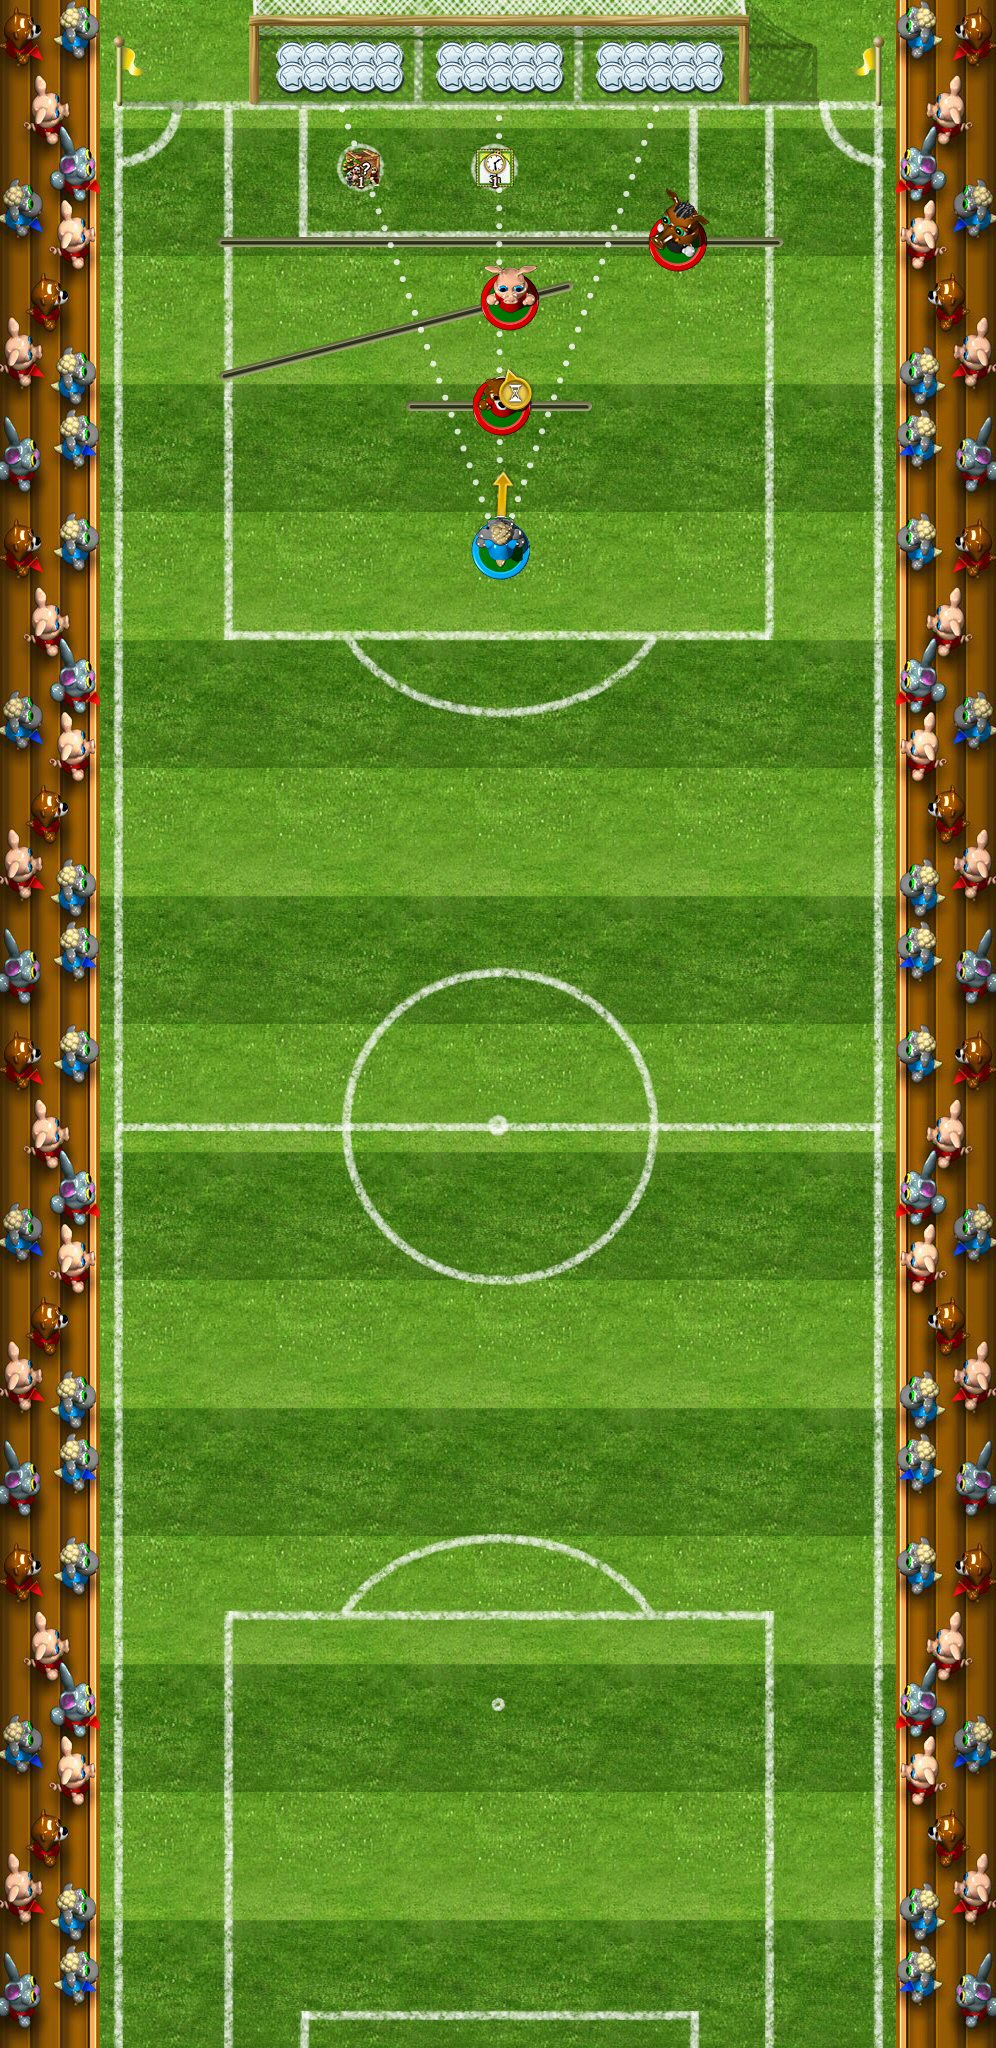 soccerjul2019_layout9.jpg